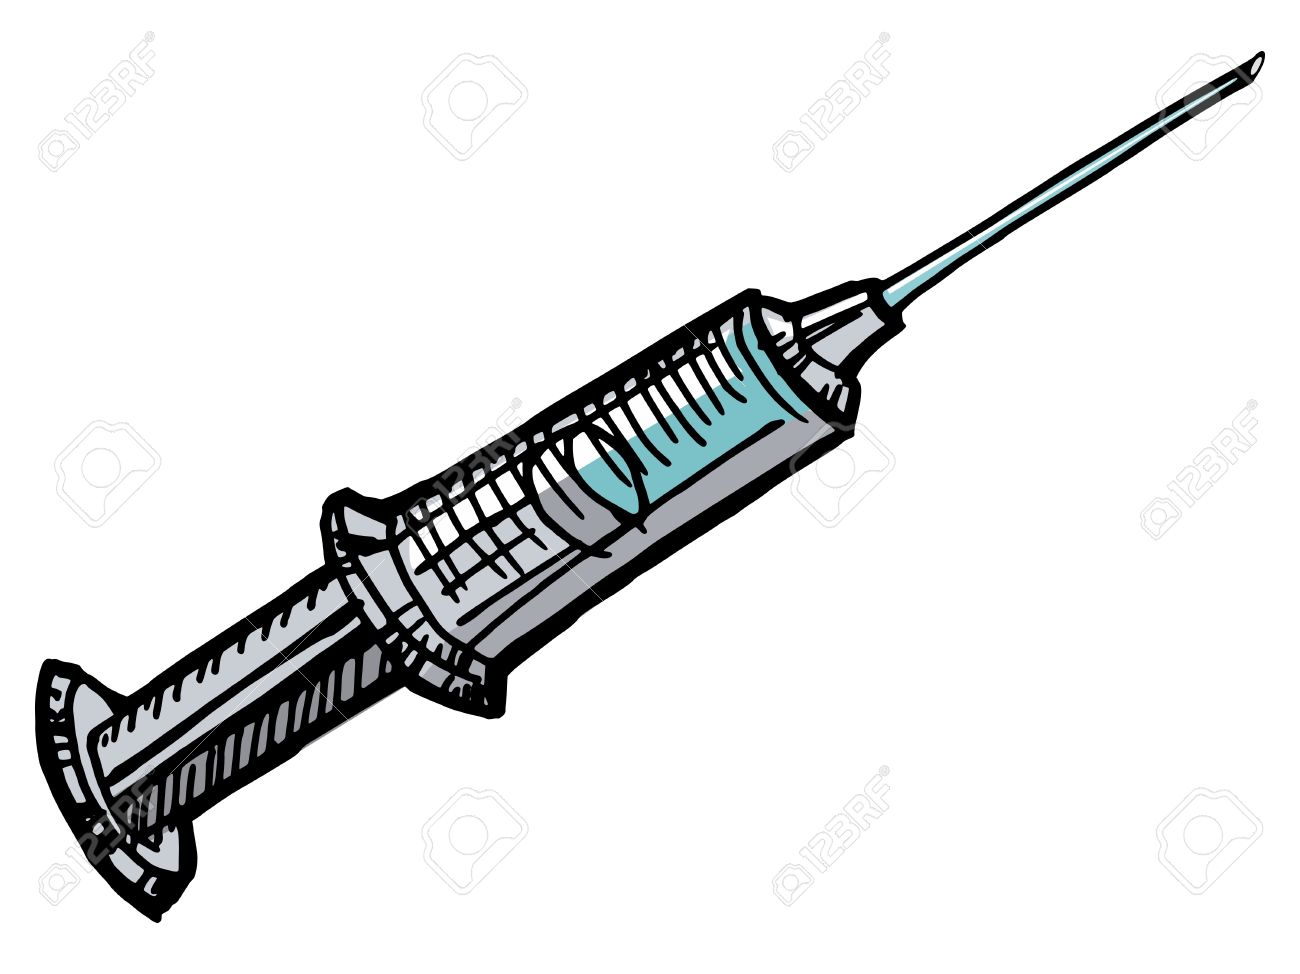 Syringe With Needle On The White Background Royalty Cliparts